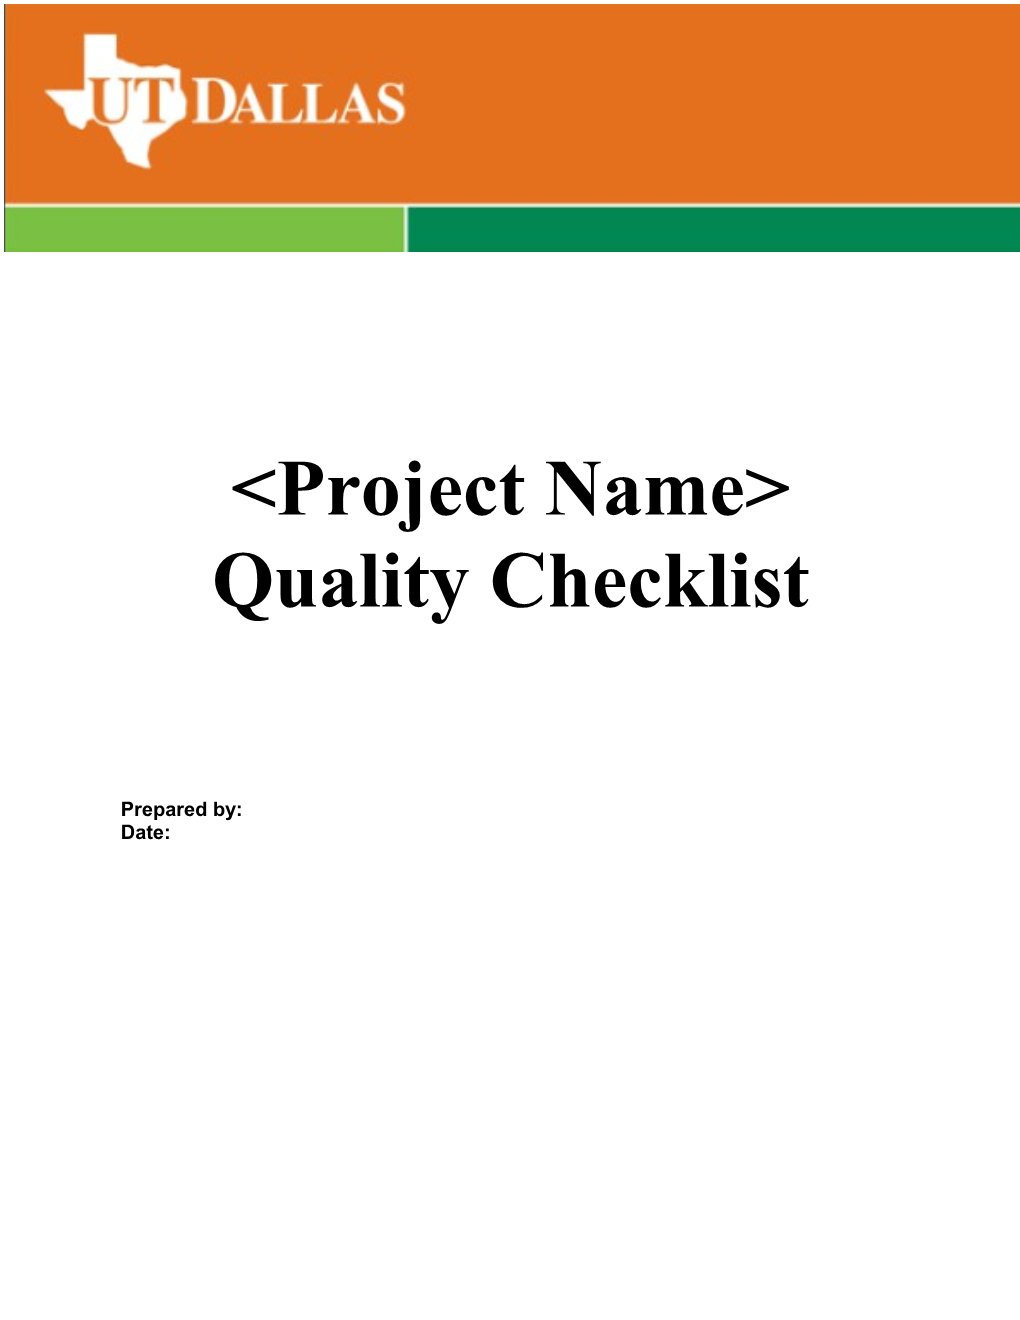 Quality Checklist Template